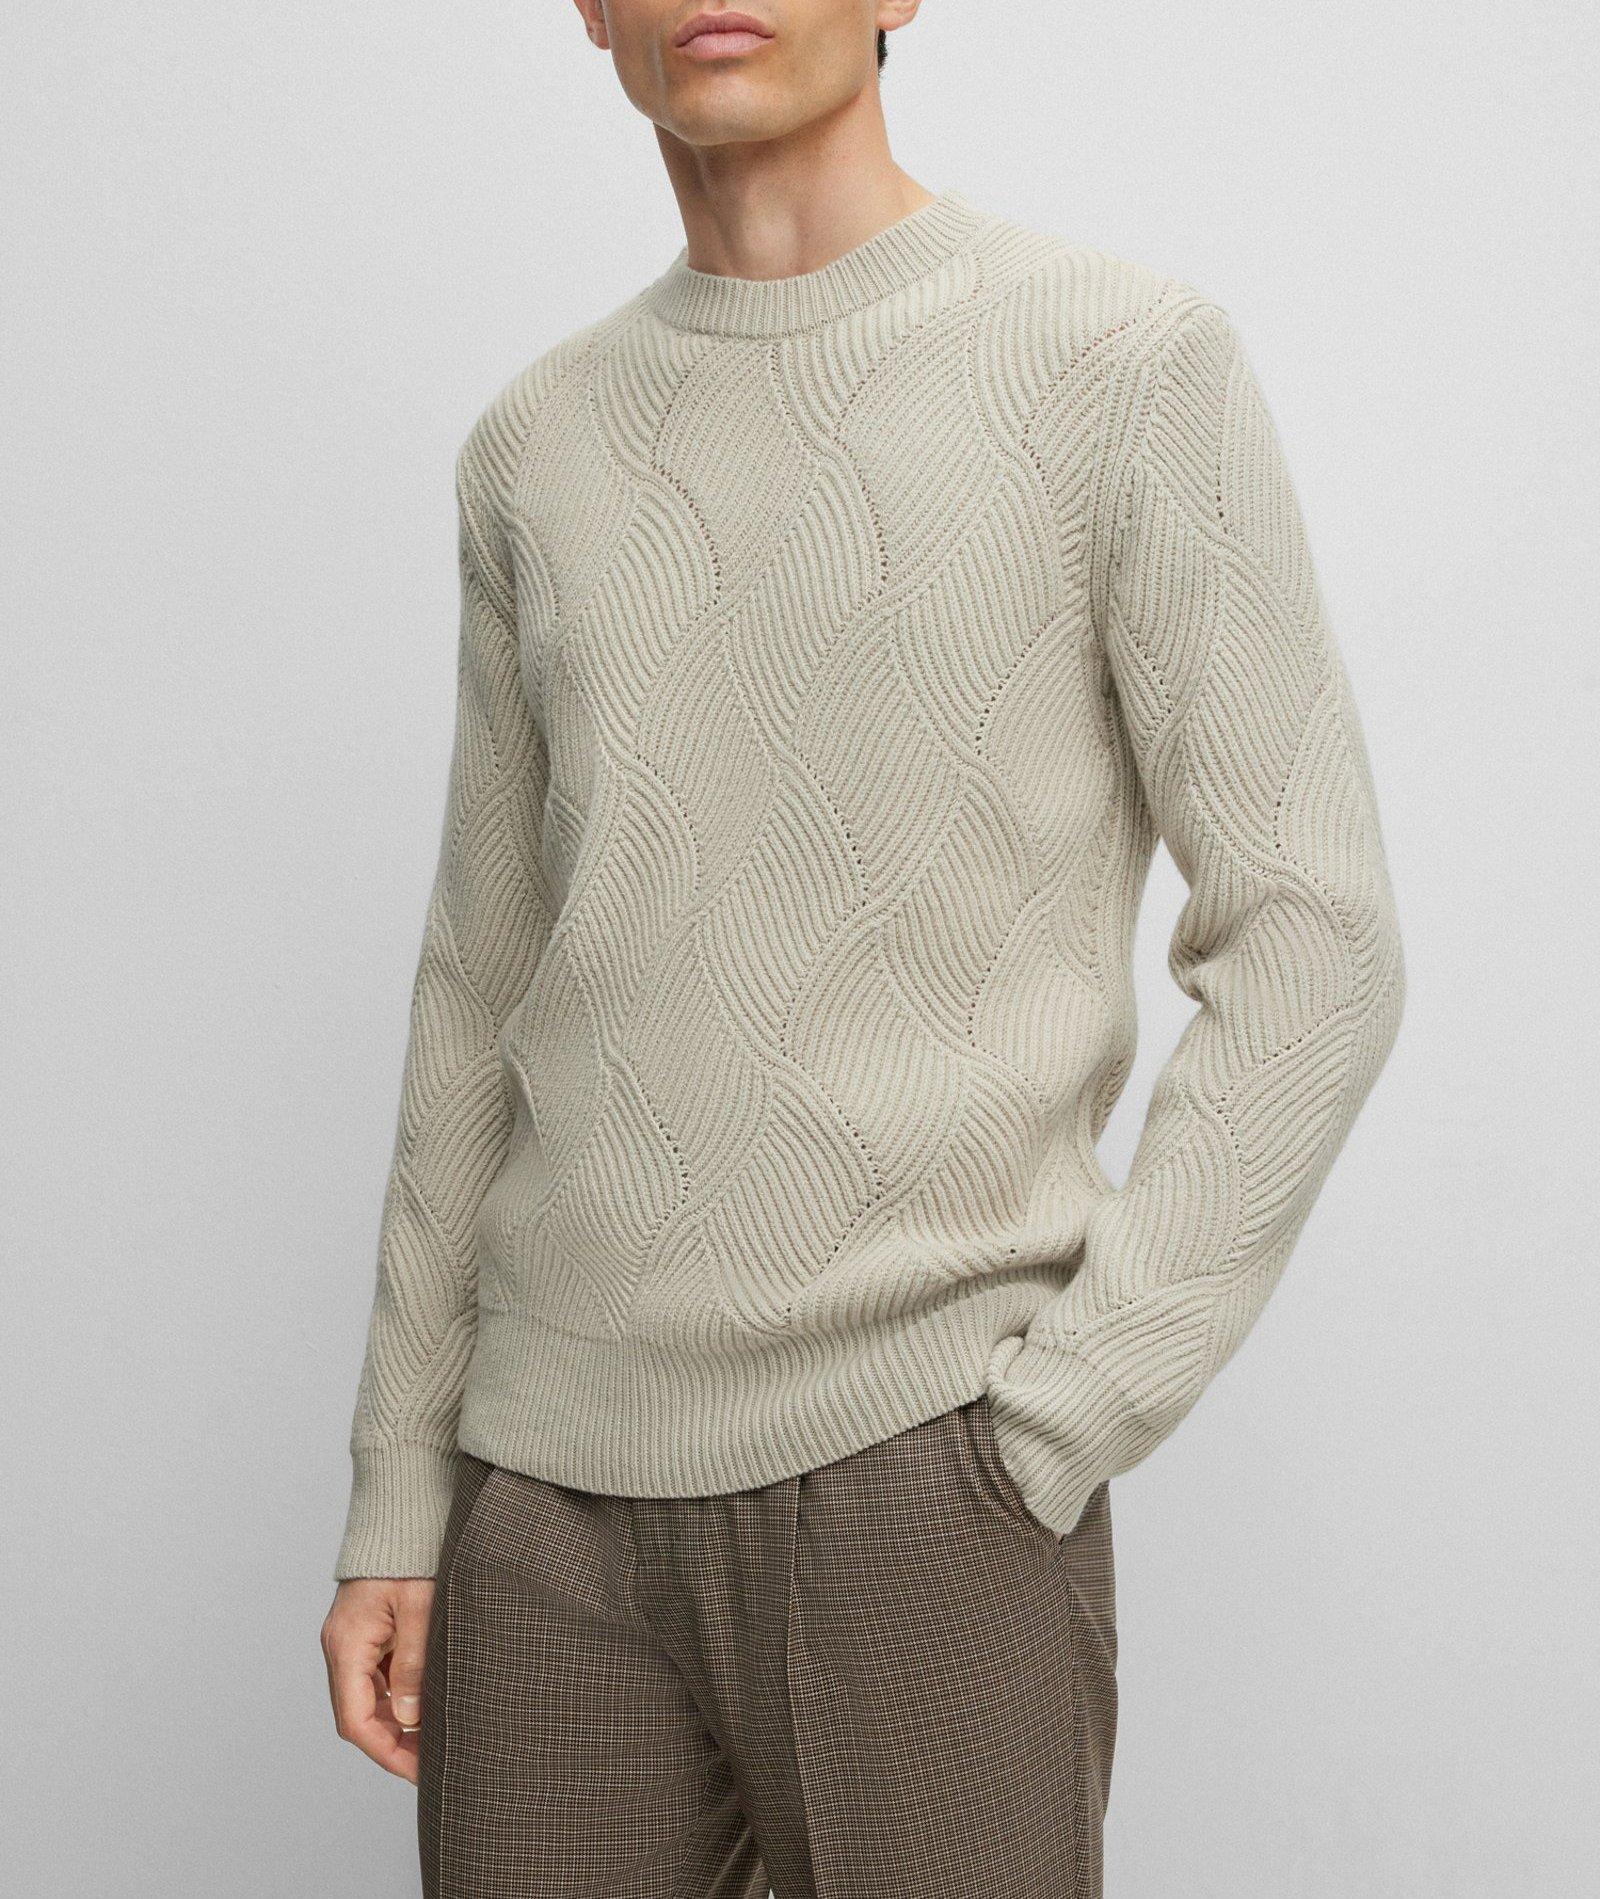 Geometric Virgin Wool-Cashmere Sweater image 1